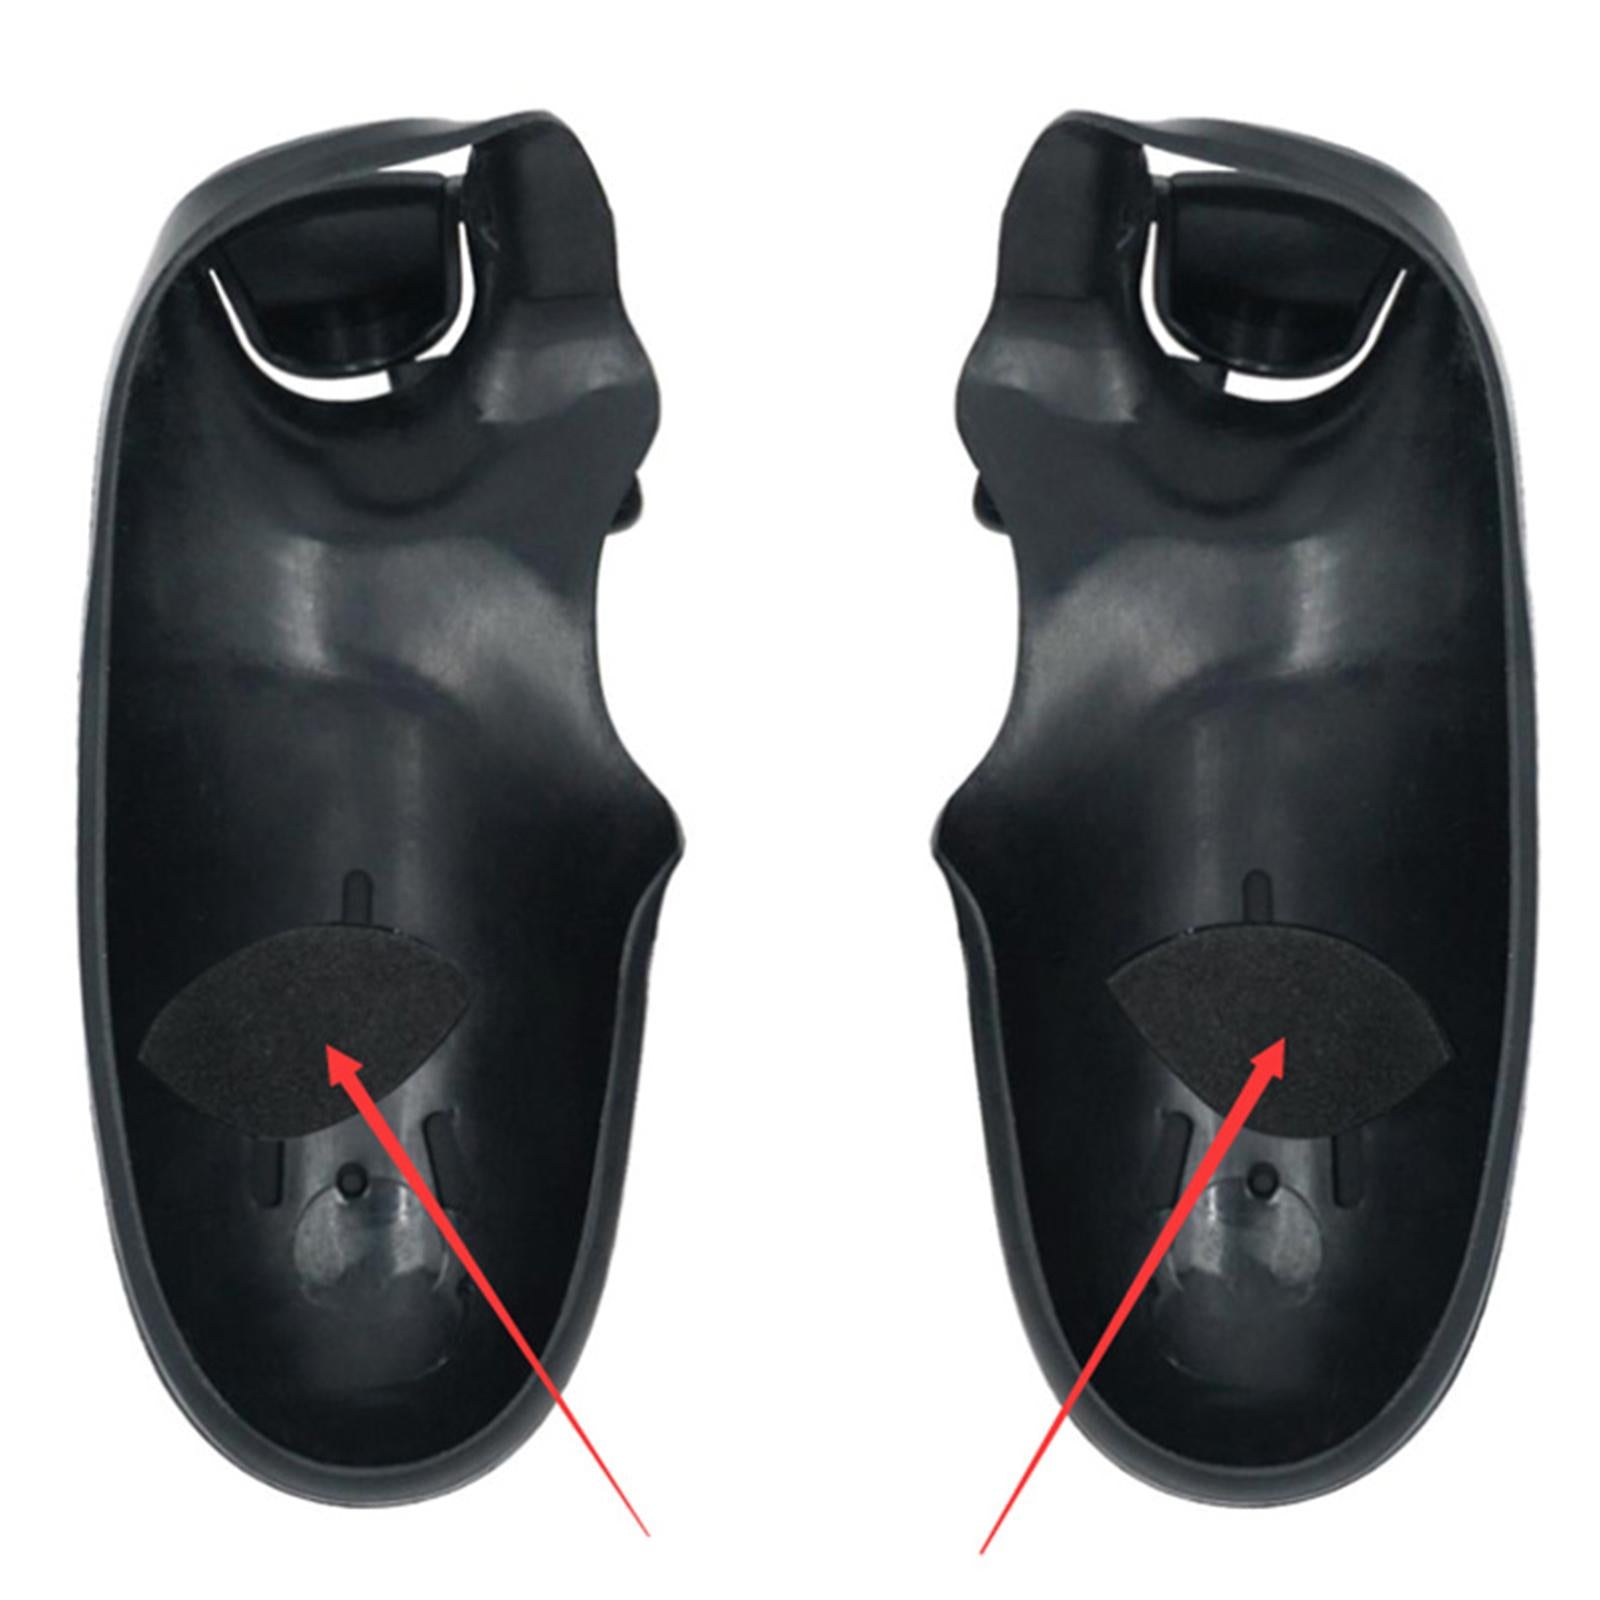 1 Pair Black Grip Cover Skin Guard Anti-Slip for PS4 Controller